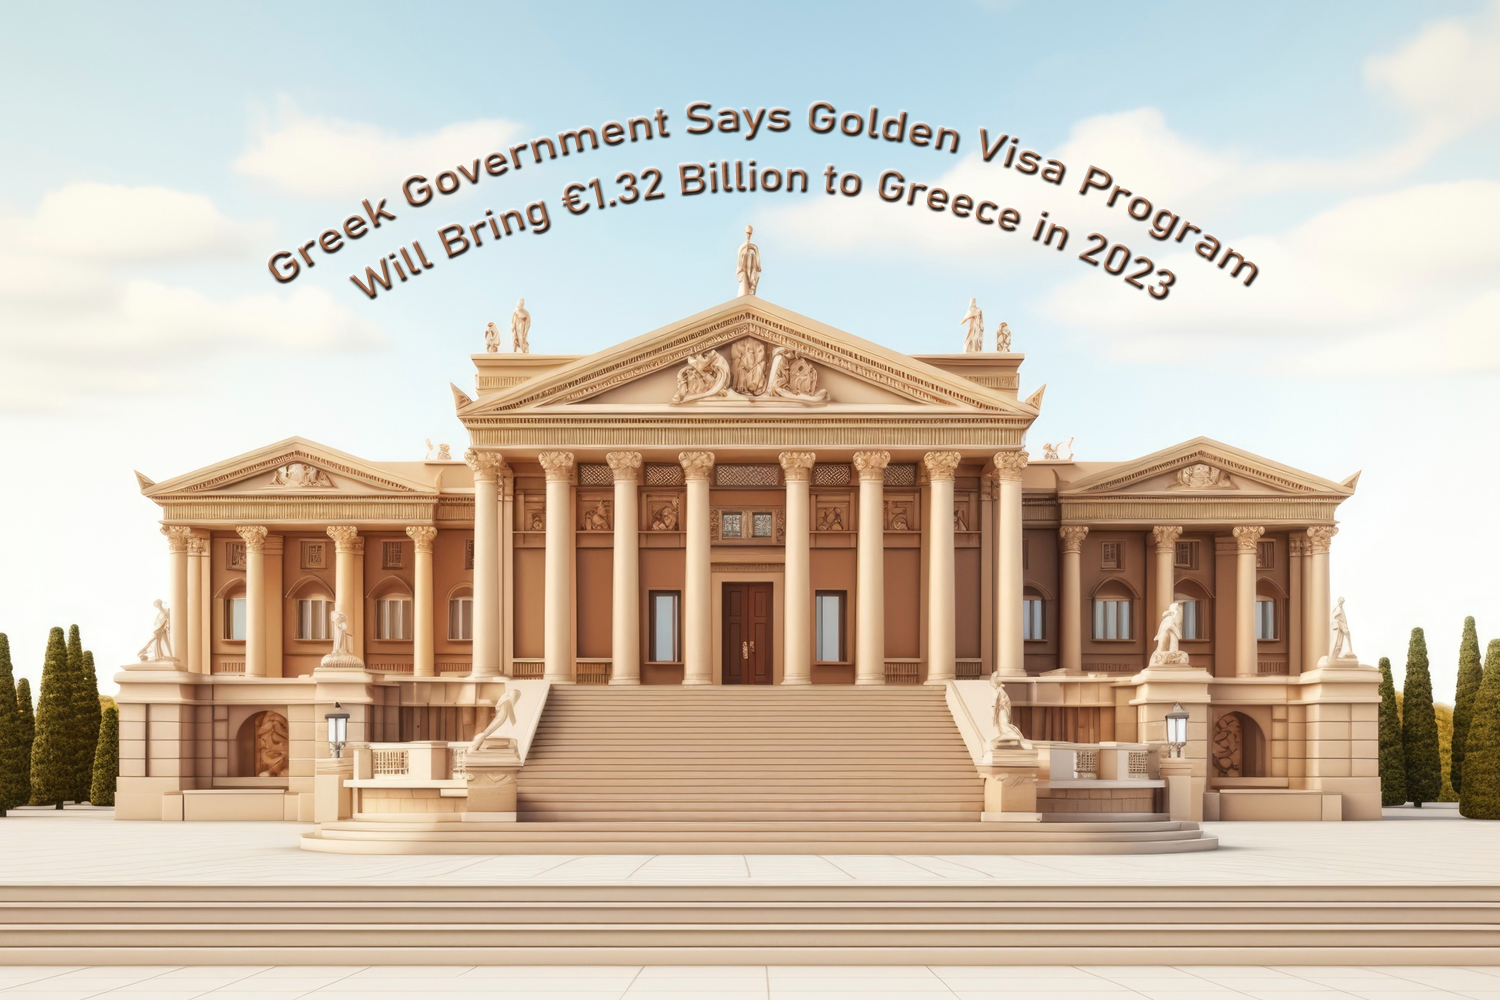 Greek Government Says Golden Visa Program Will Bring €1.32 Billion to Greece in 2023.